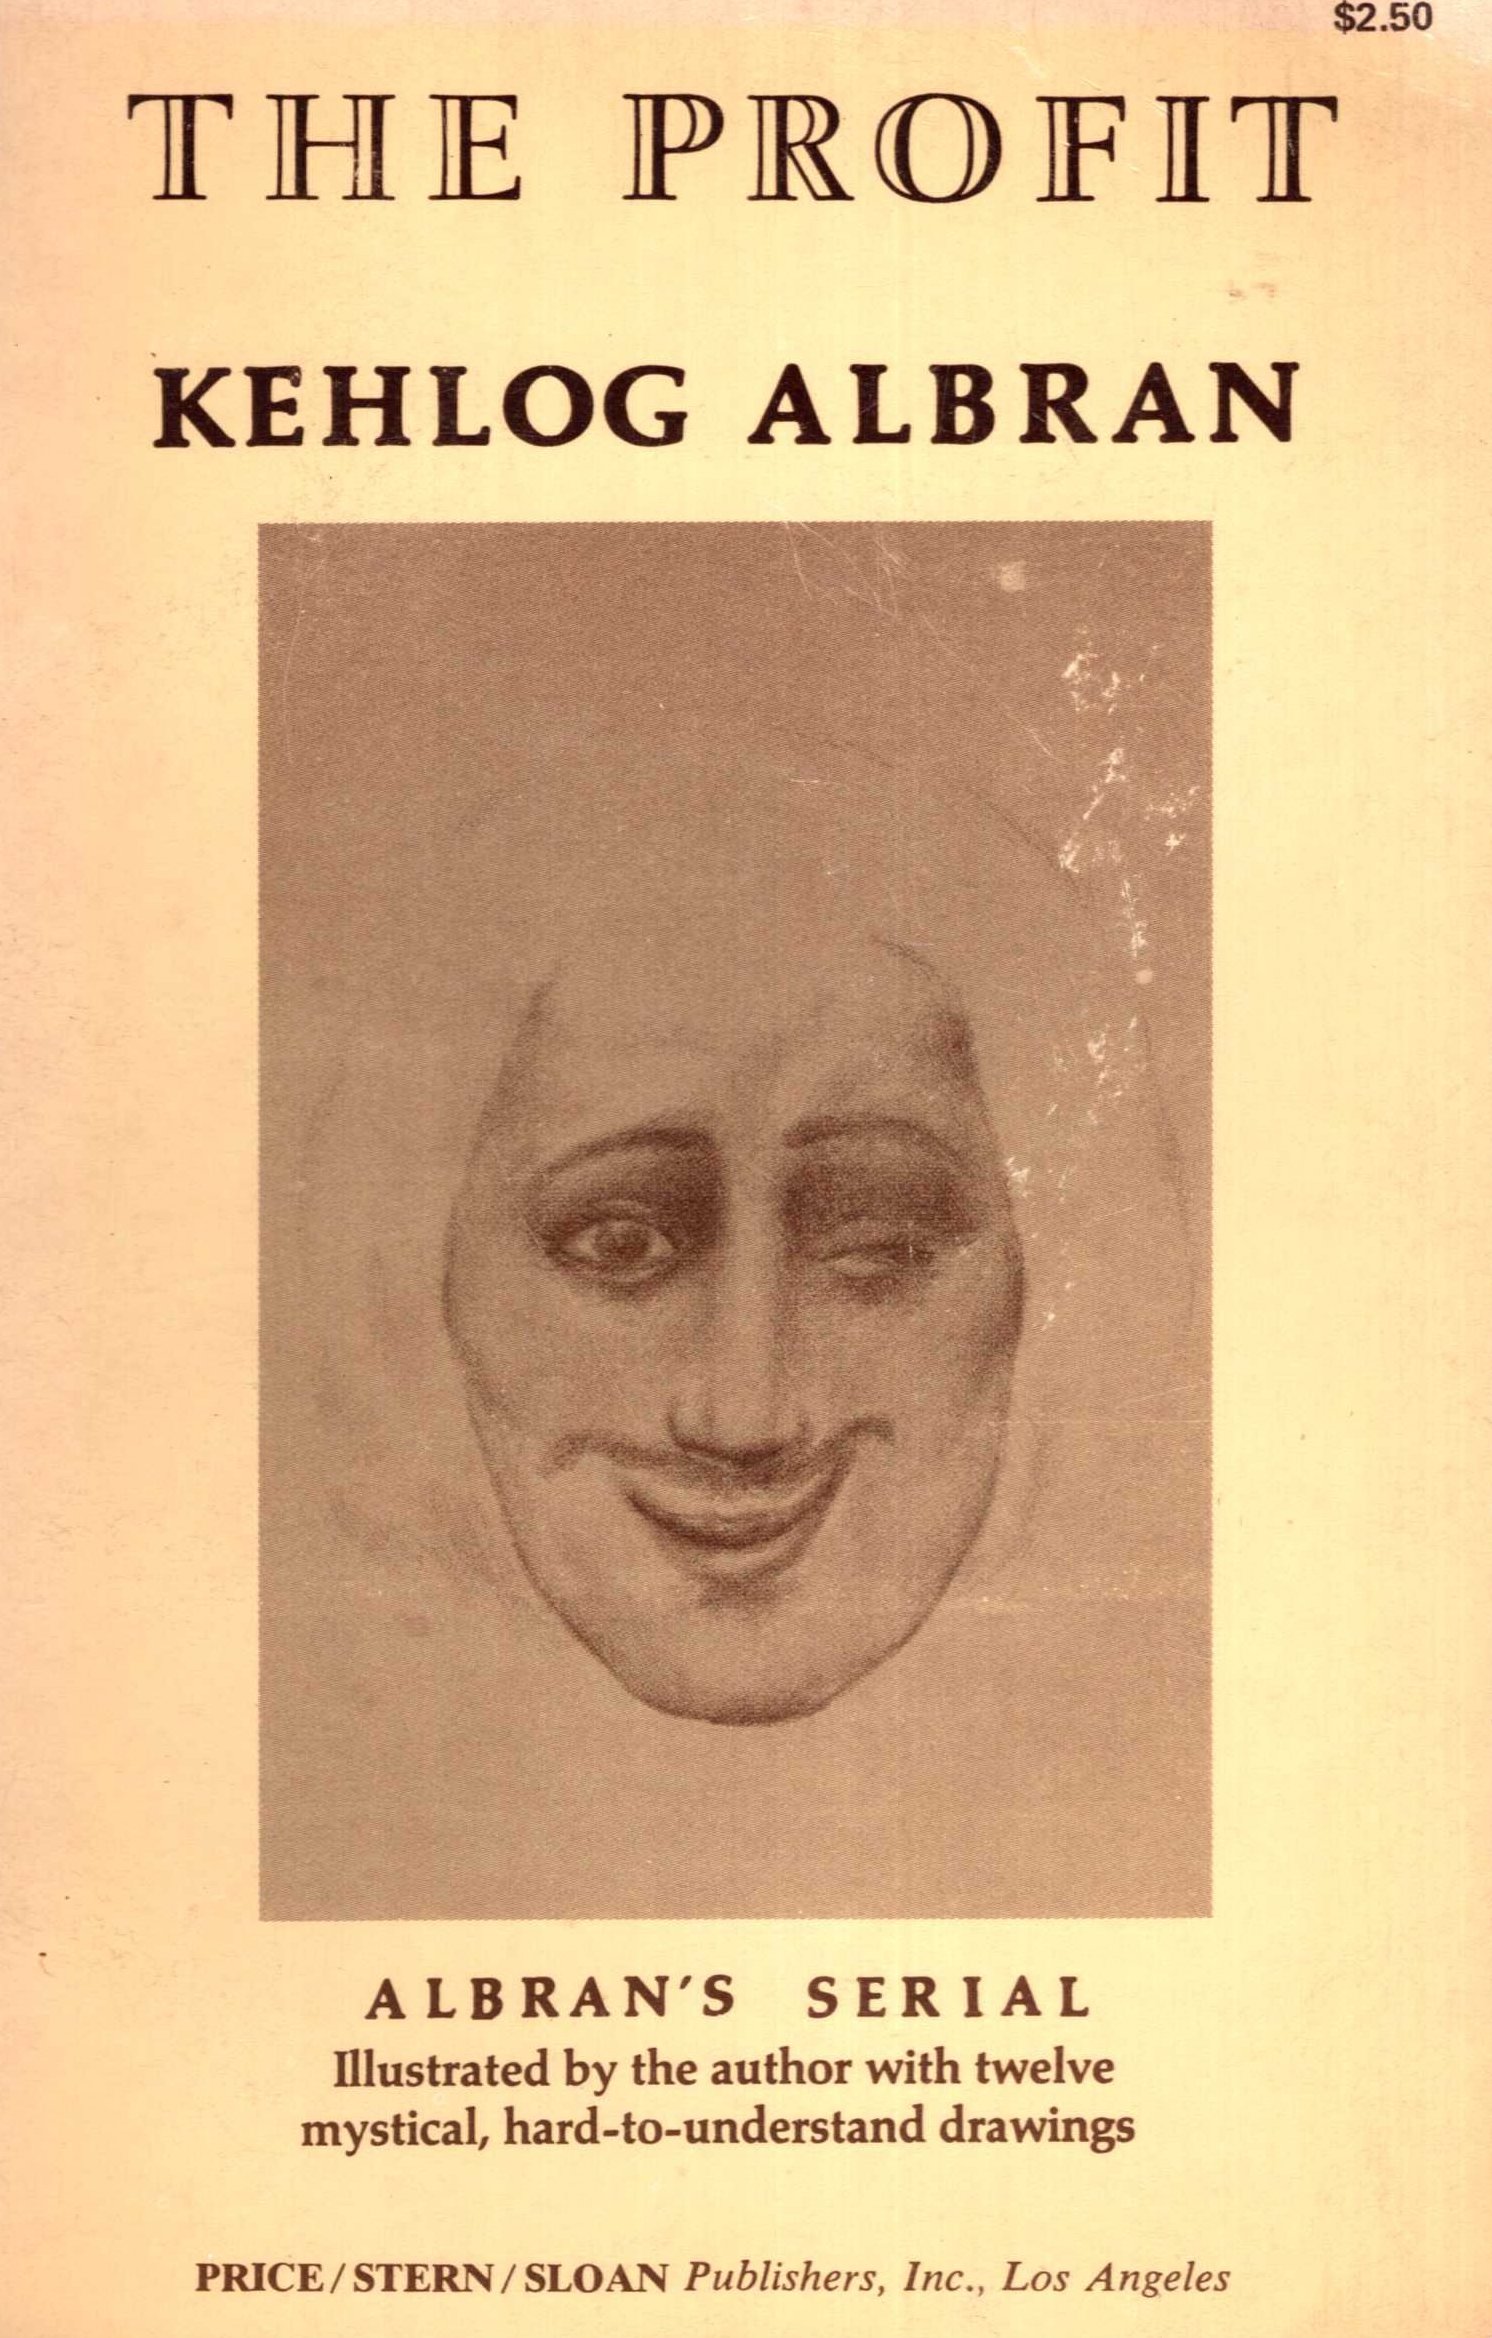 Kehlog Albran, The Profit, Los Angeles: Price/Stern/Sloan Publishers, 1973.